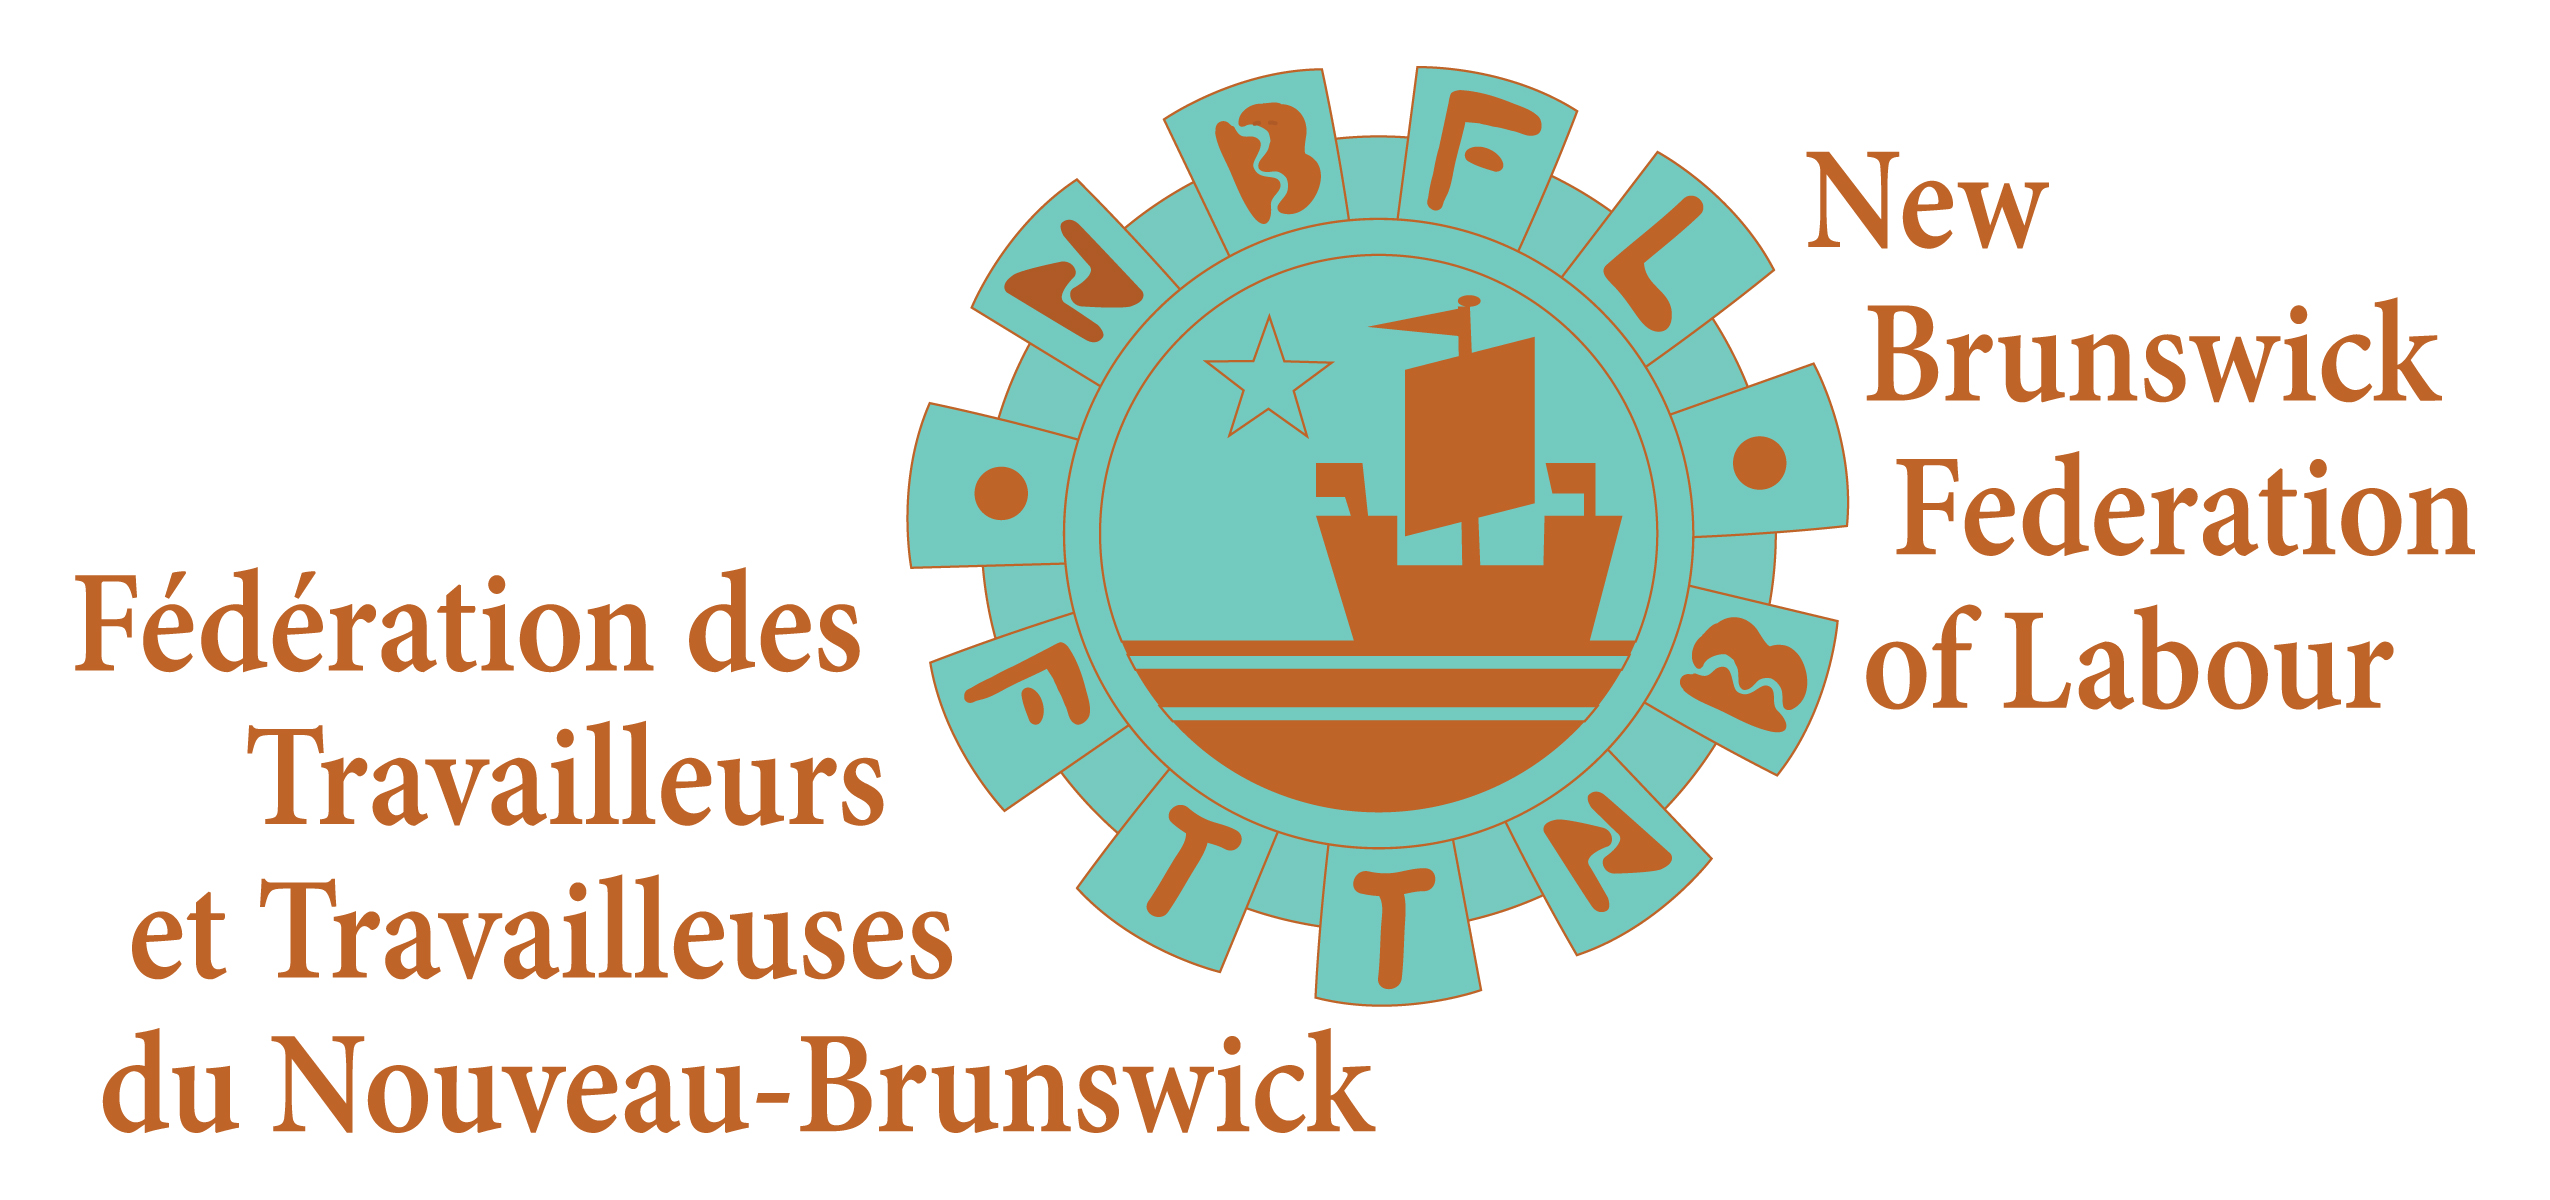 New Brunswick Federation of Labour Logo